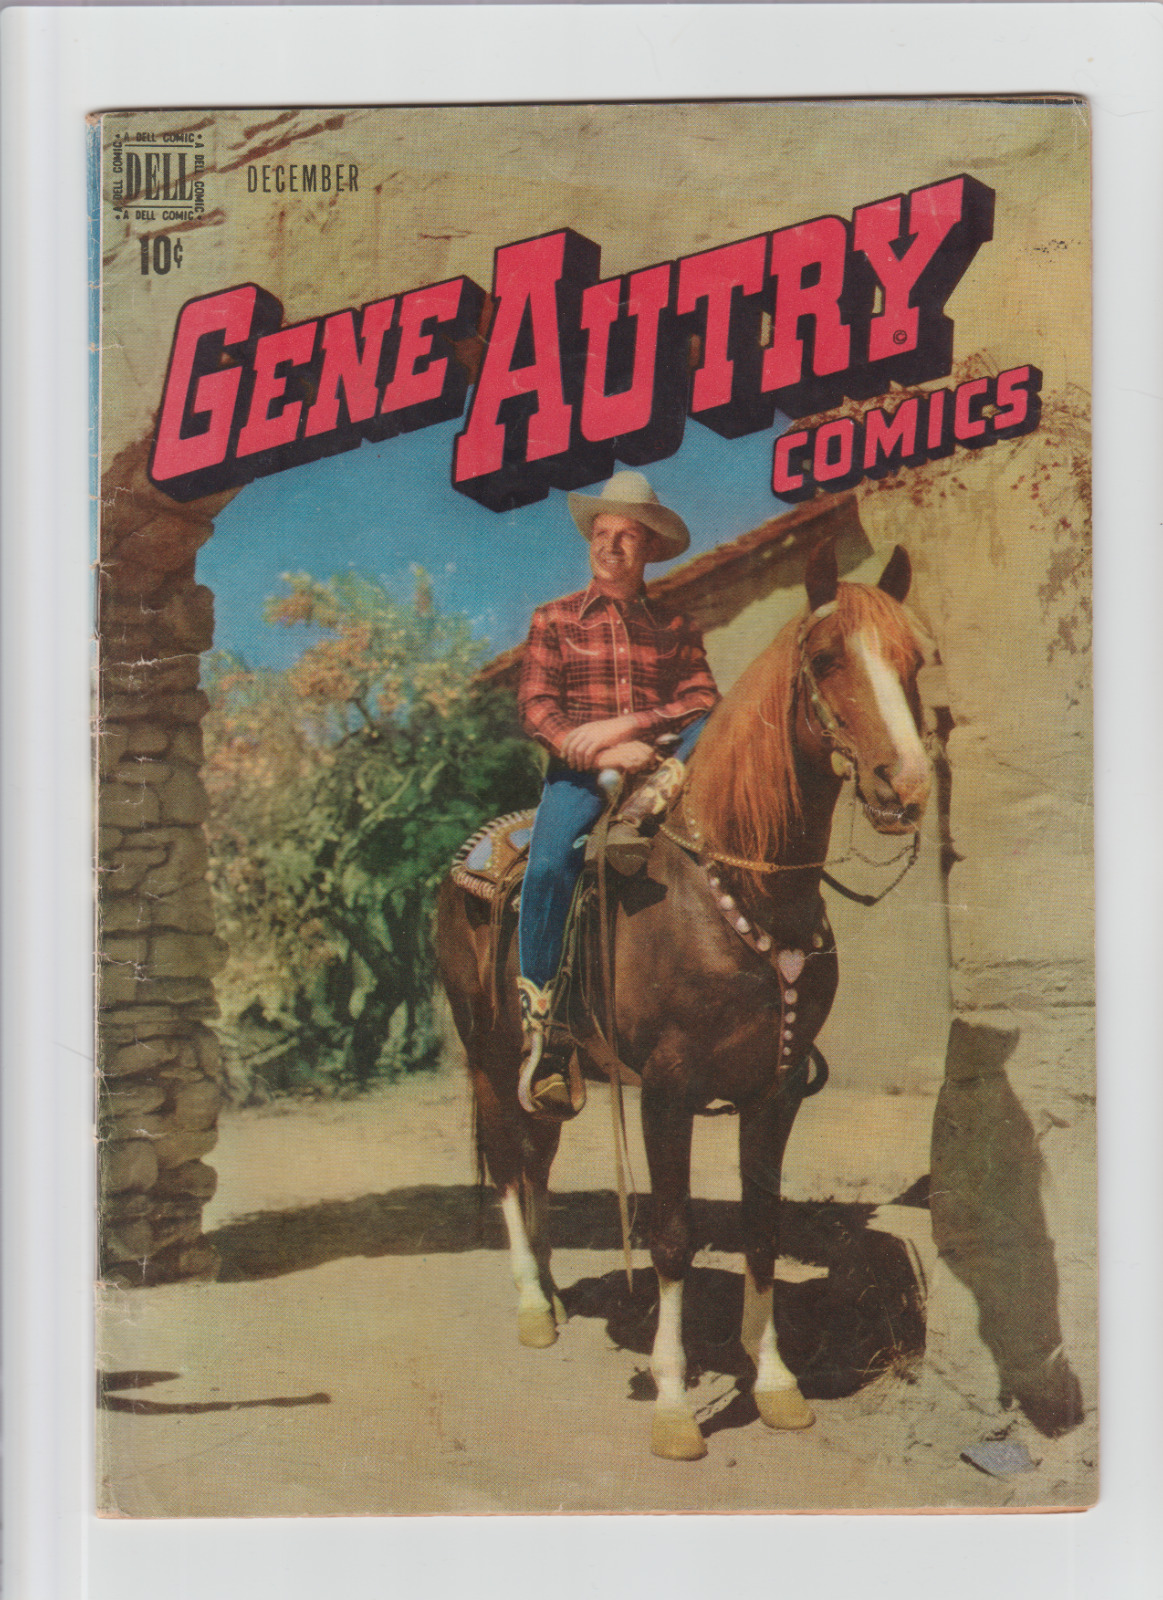 Gene Autry Comics #22 - Dec. 1948